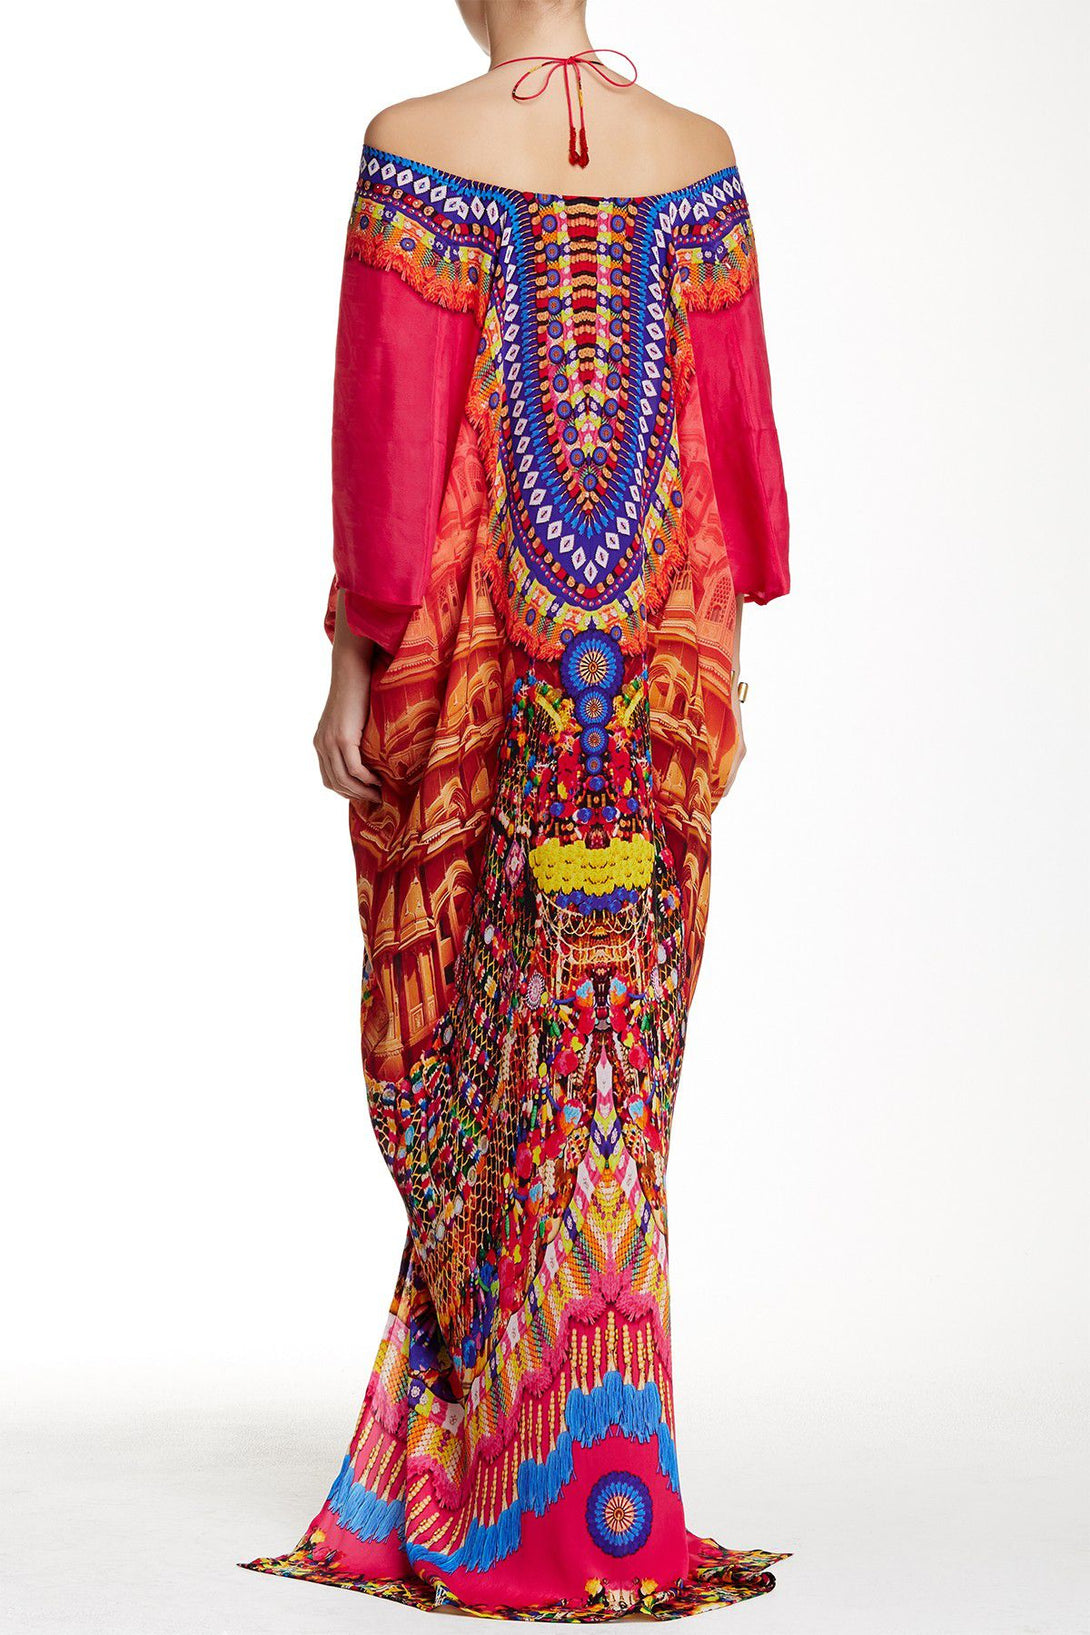   caftans for plus size, silk caftan dress, Shahida Parides, caftans for women, dresses for vacation,